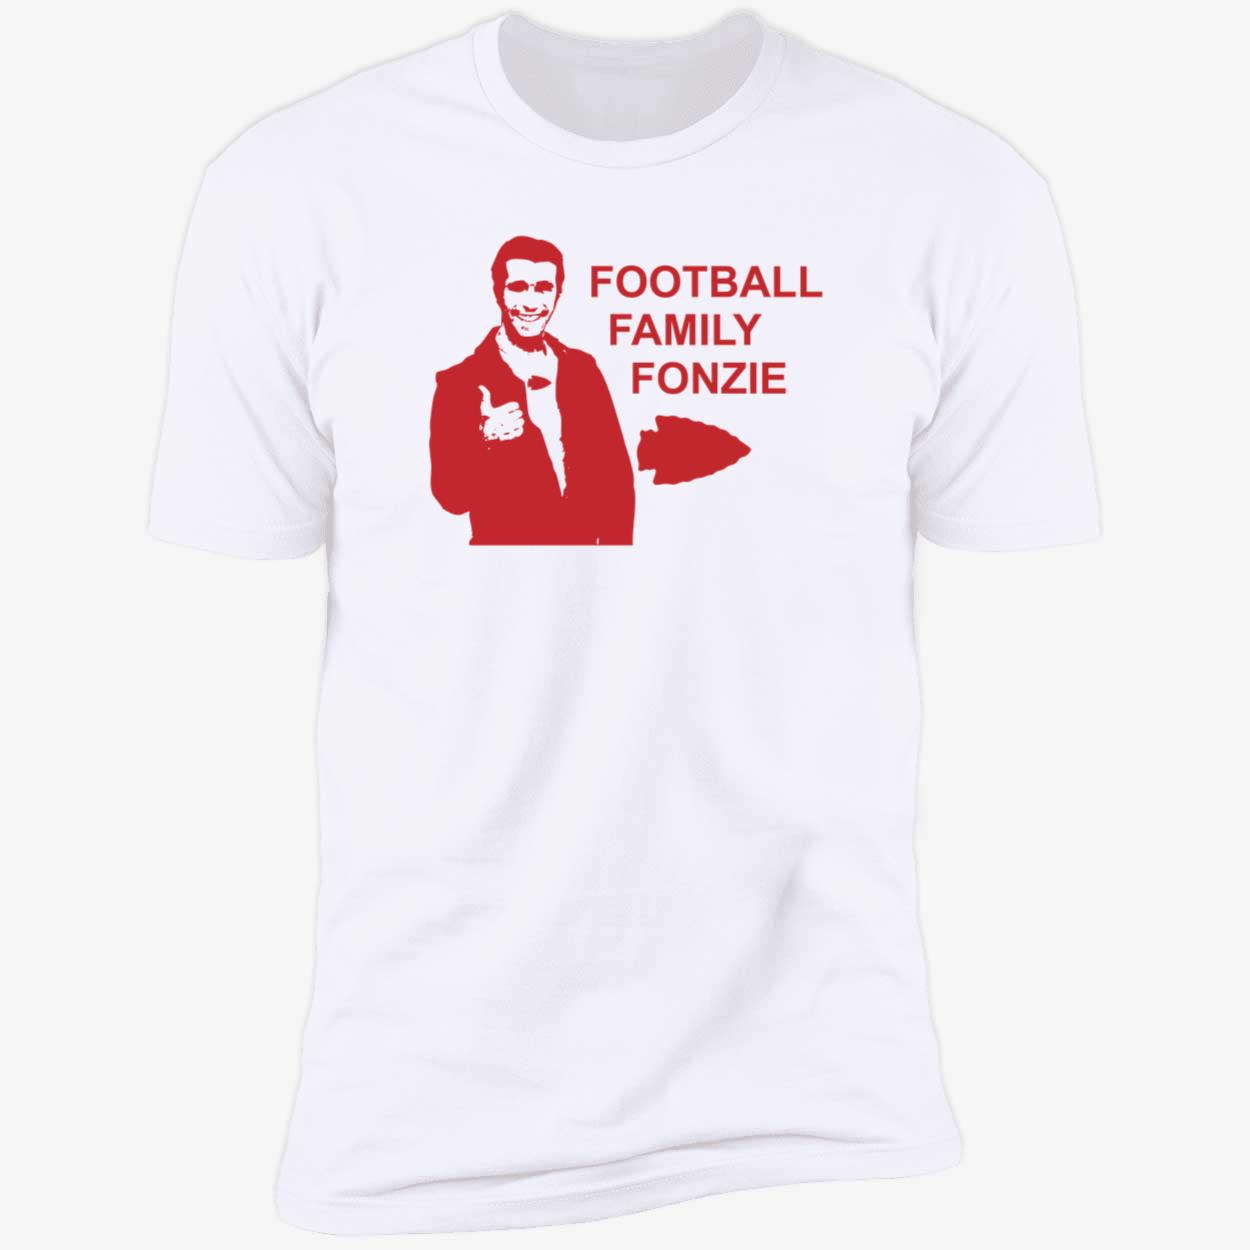 aaronladd0 Football Family Fonzie Premium SS T-Shirt